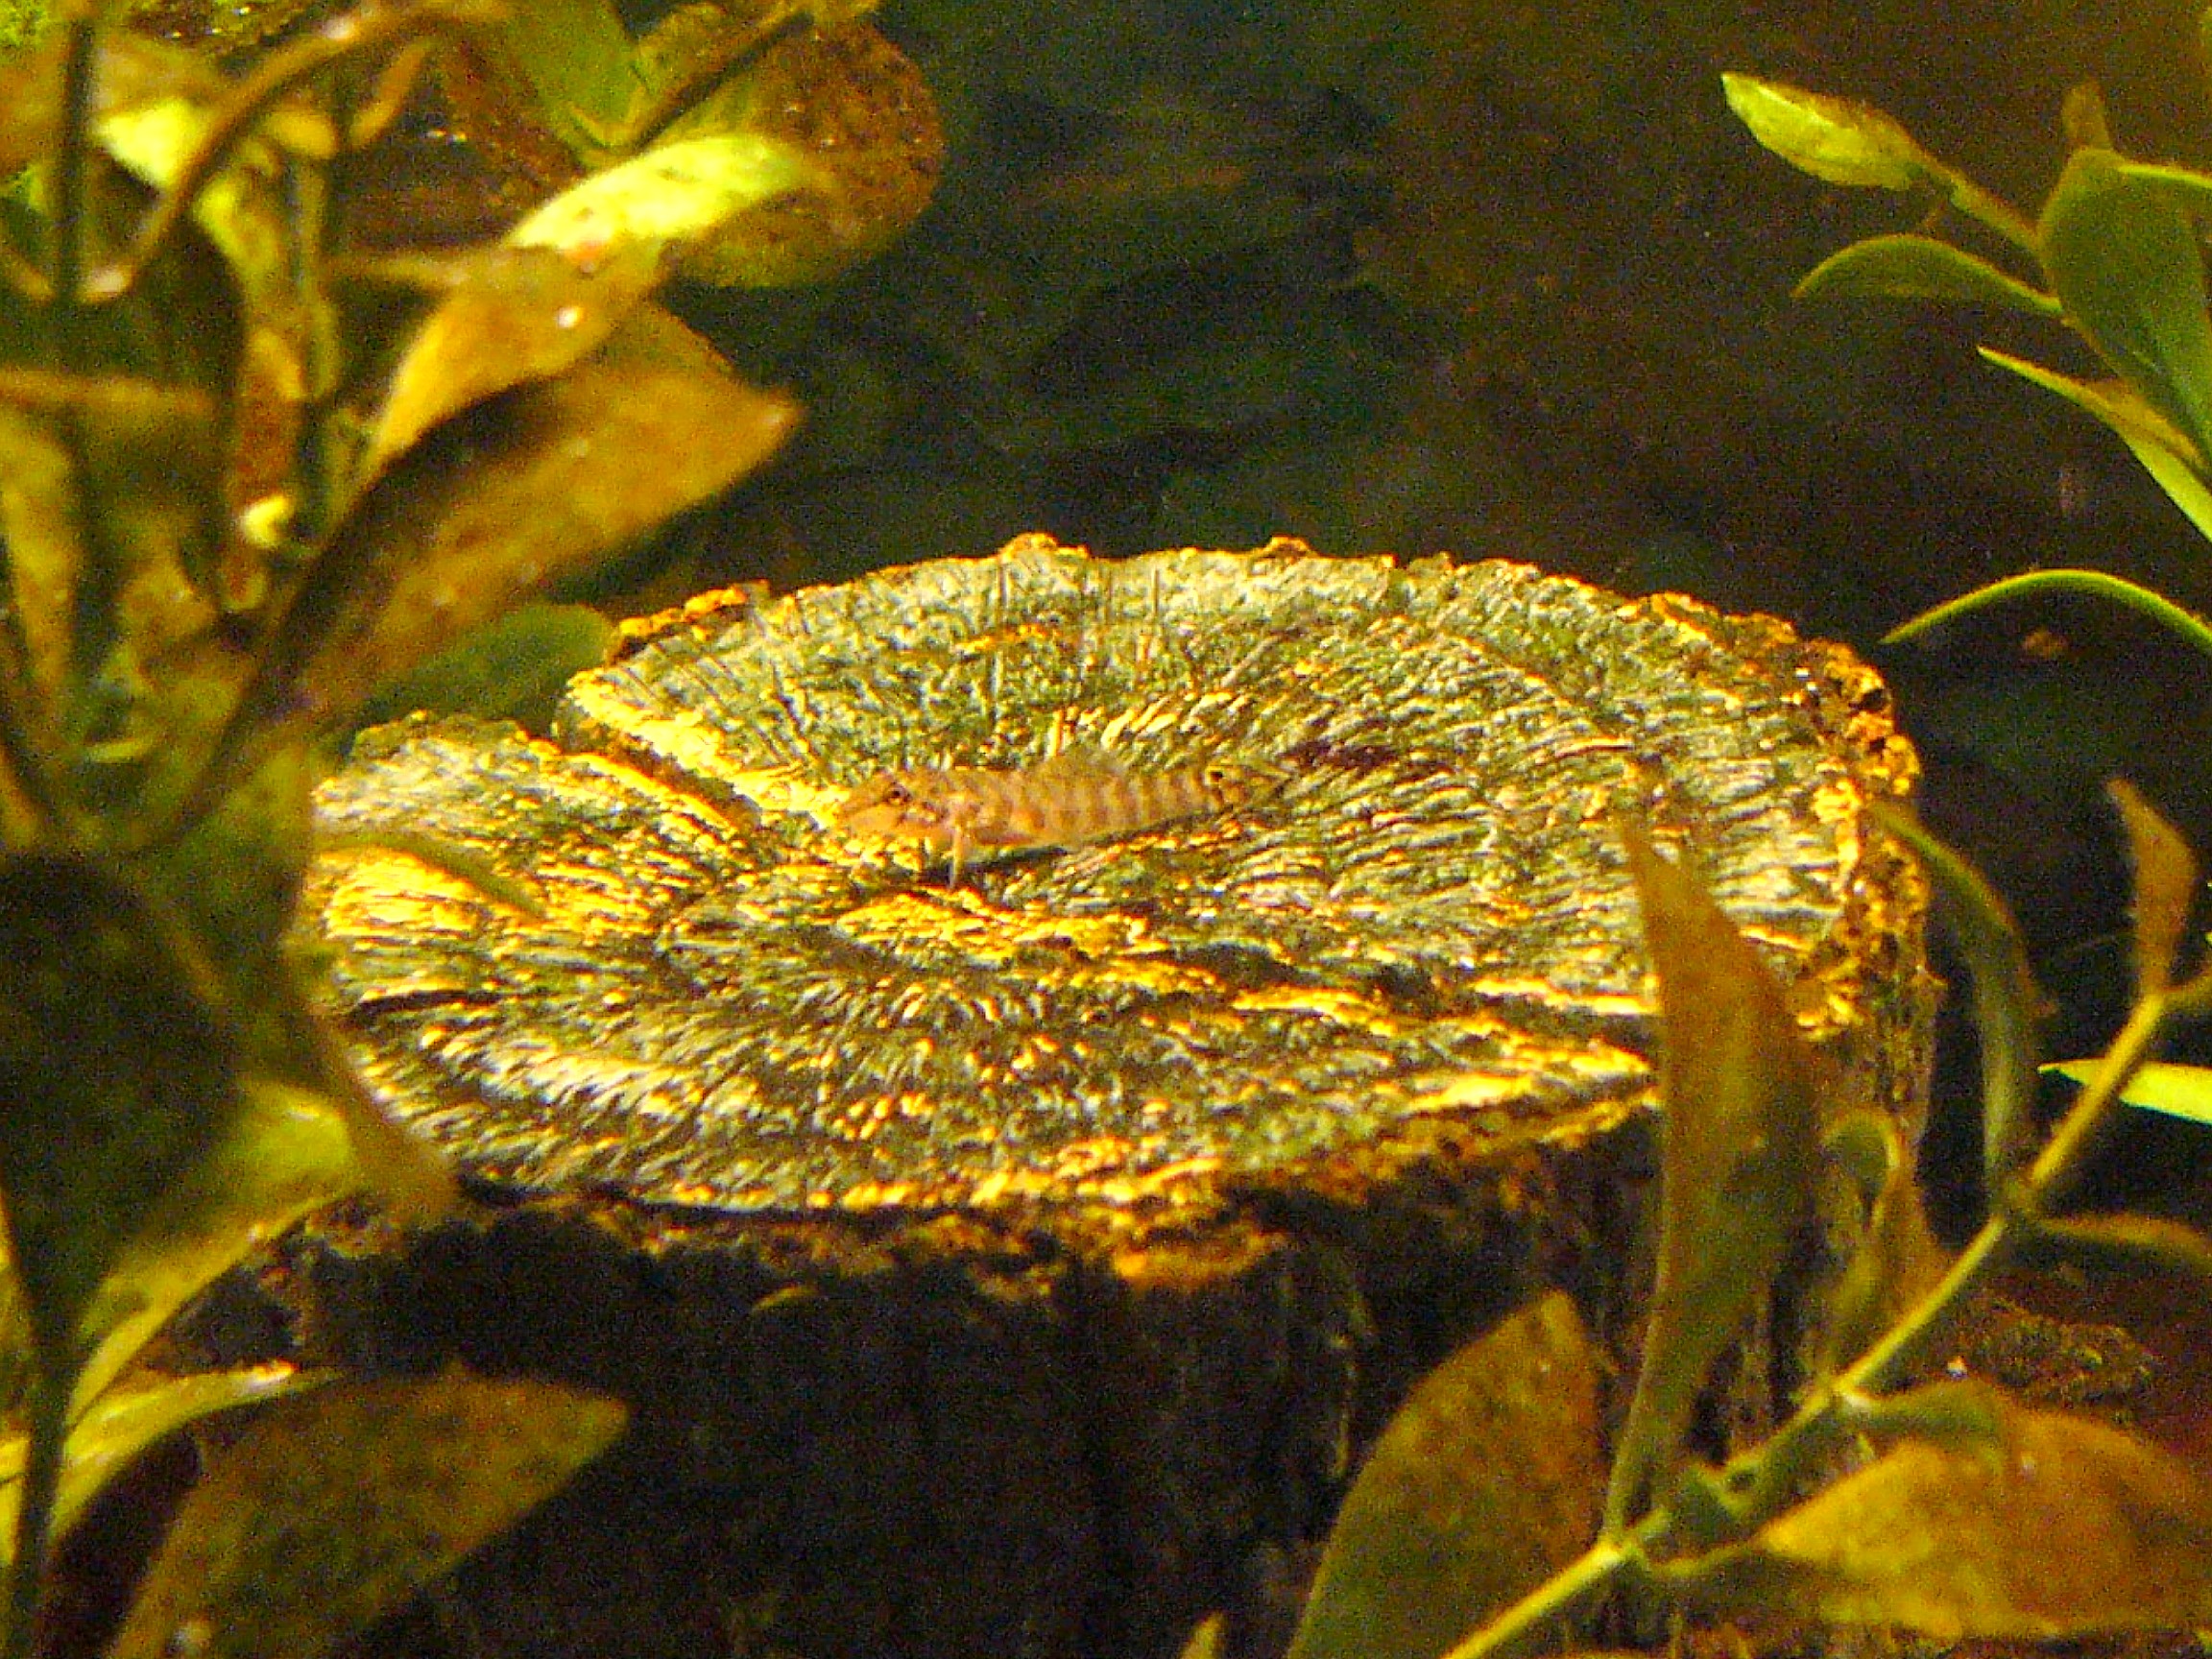 Acanthocobitis botia - Baby on 3.5" diameter log surface.